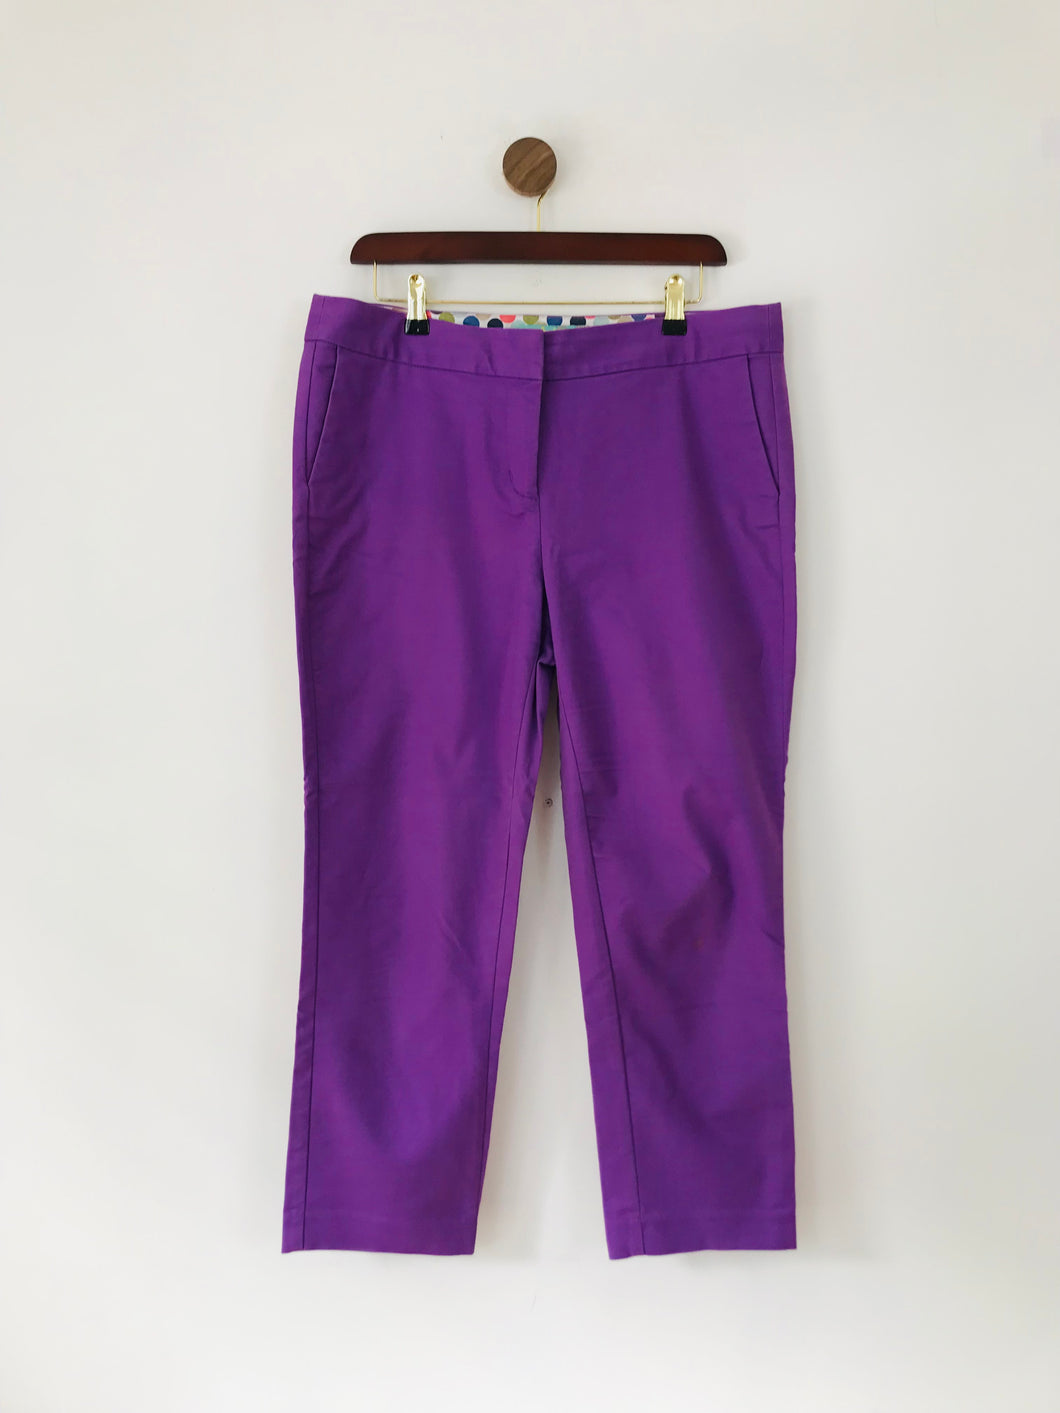 Boden Women's Chinos Trousers | UK14 | Purple